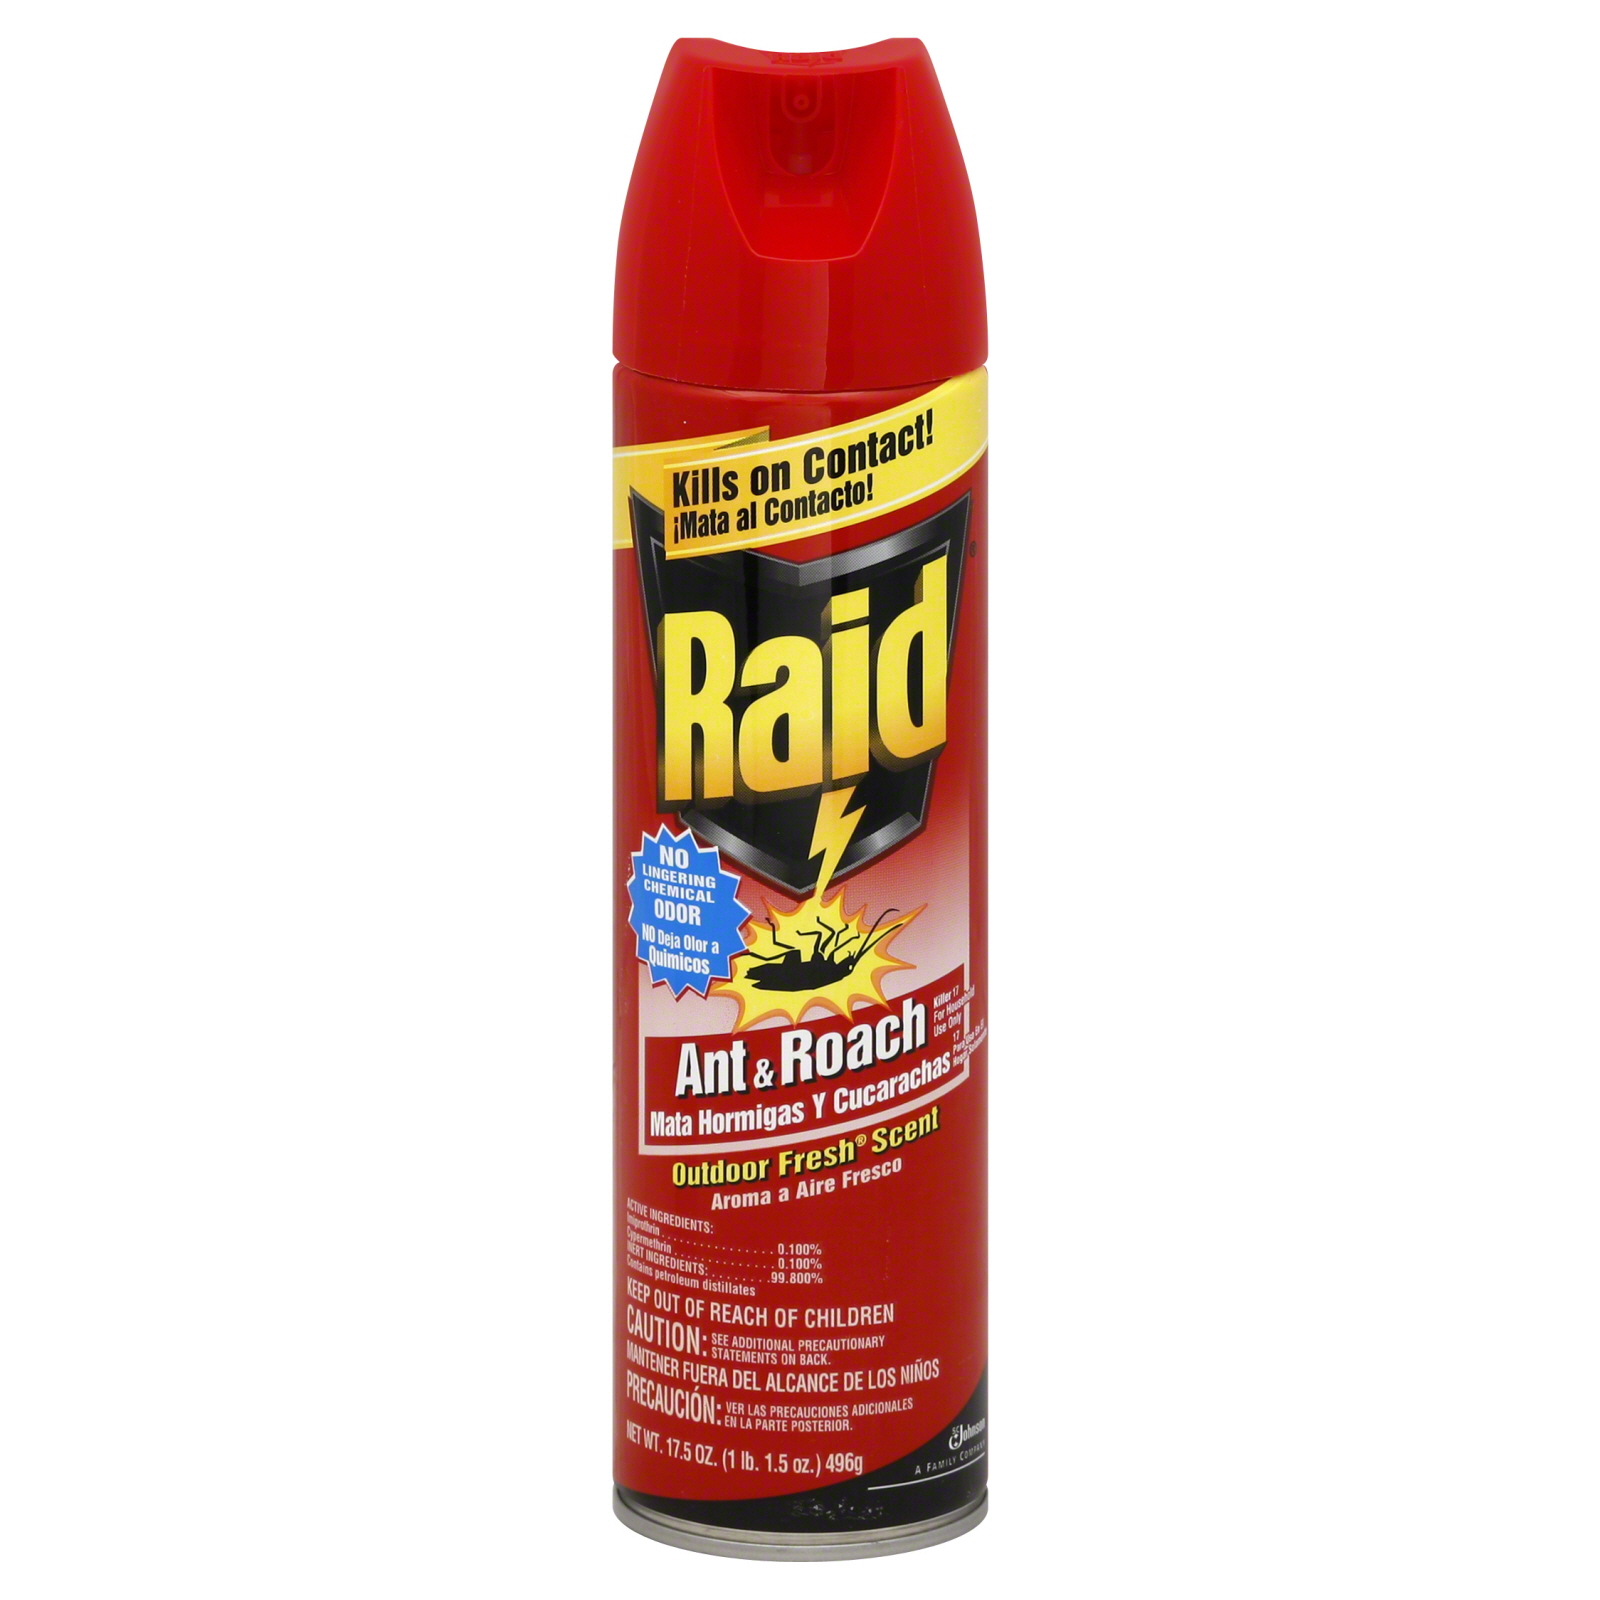 Raid Ant & Roach Killer 17, Outdoor Fresh Scent, 17.5 oz (1 lb 1.5 oz) 496 g